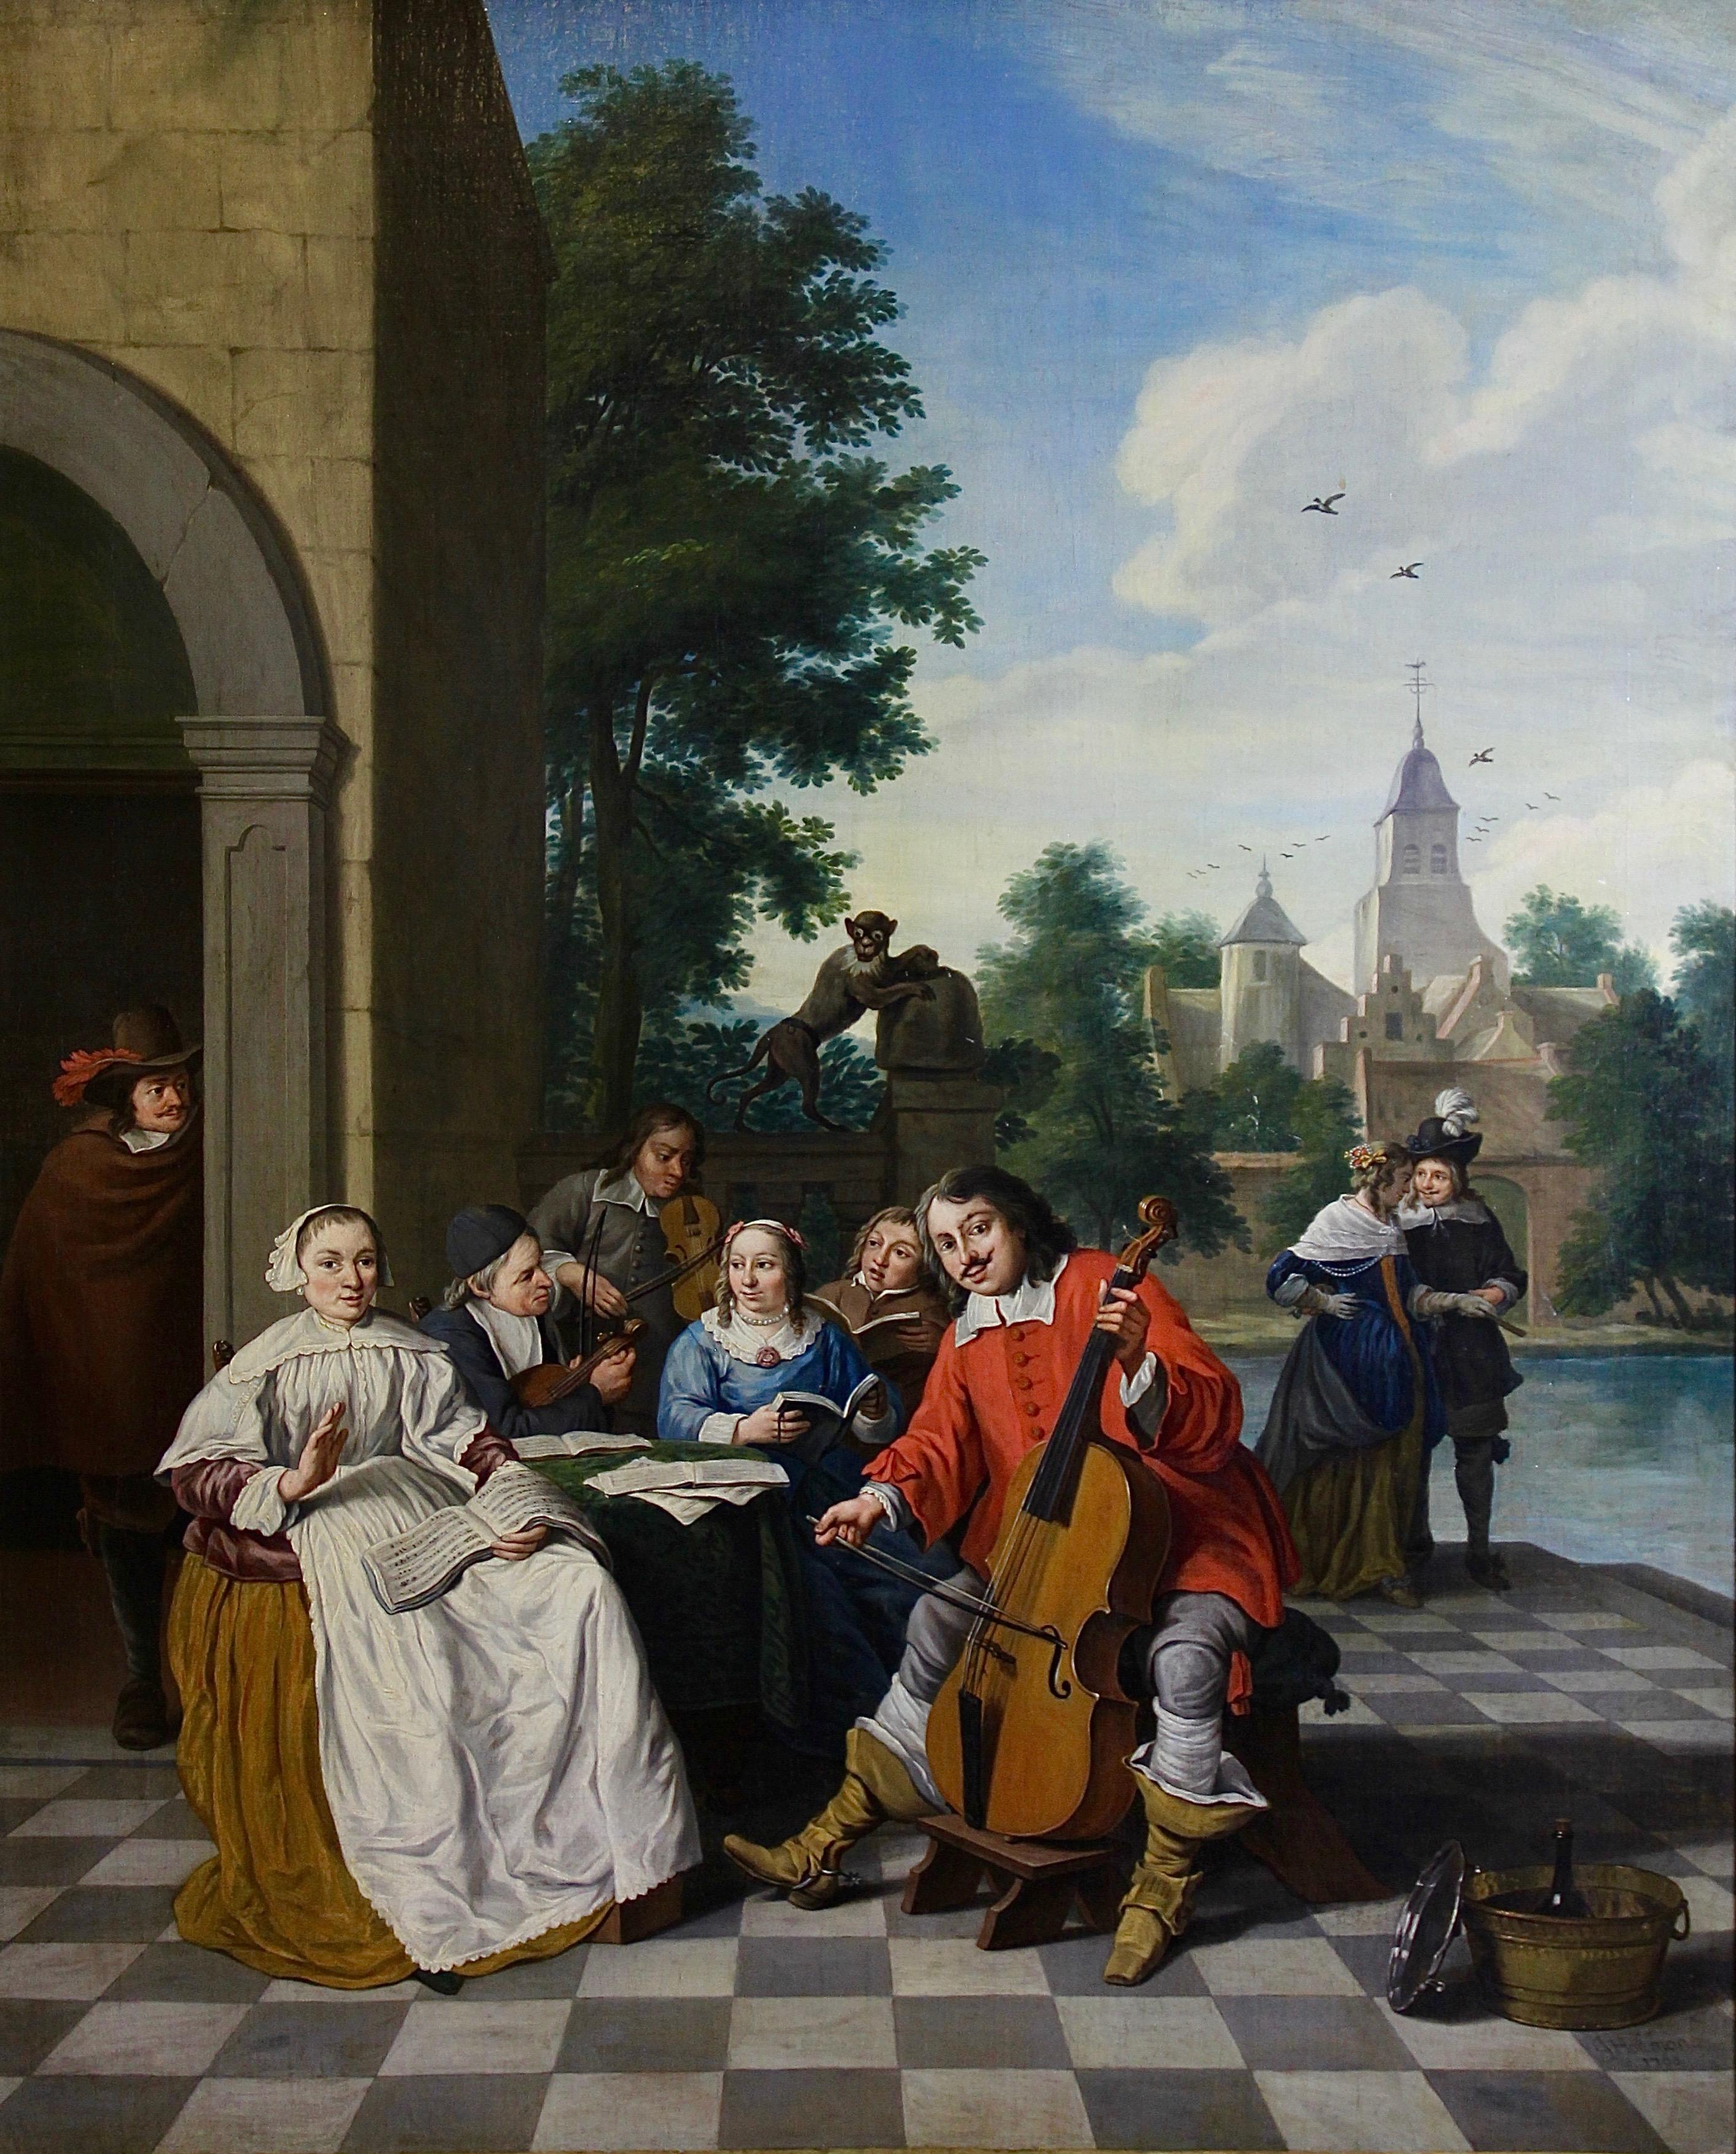 Jan Jozef Horemans, The Younger Figurative Painting – 1760 flämisches Barock-Ölgemälde. Romantische Szene. Signiert und datiert.